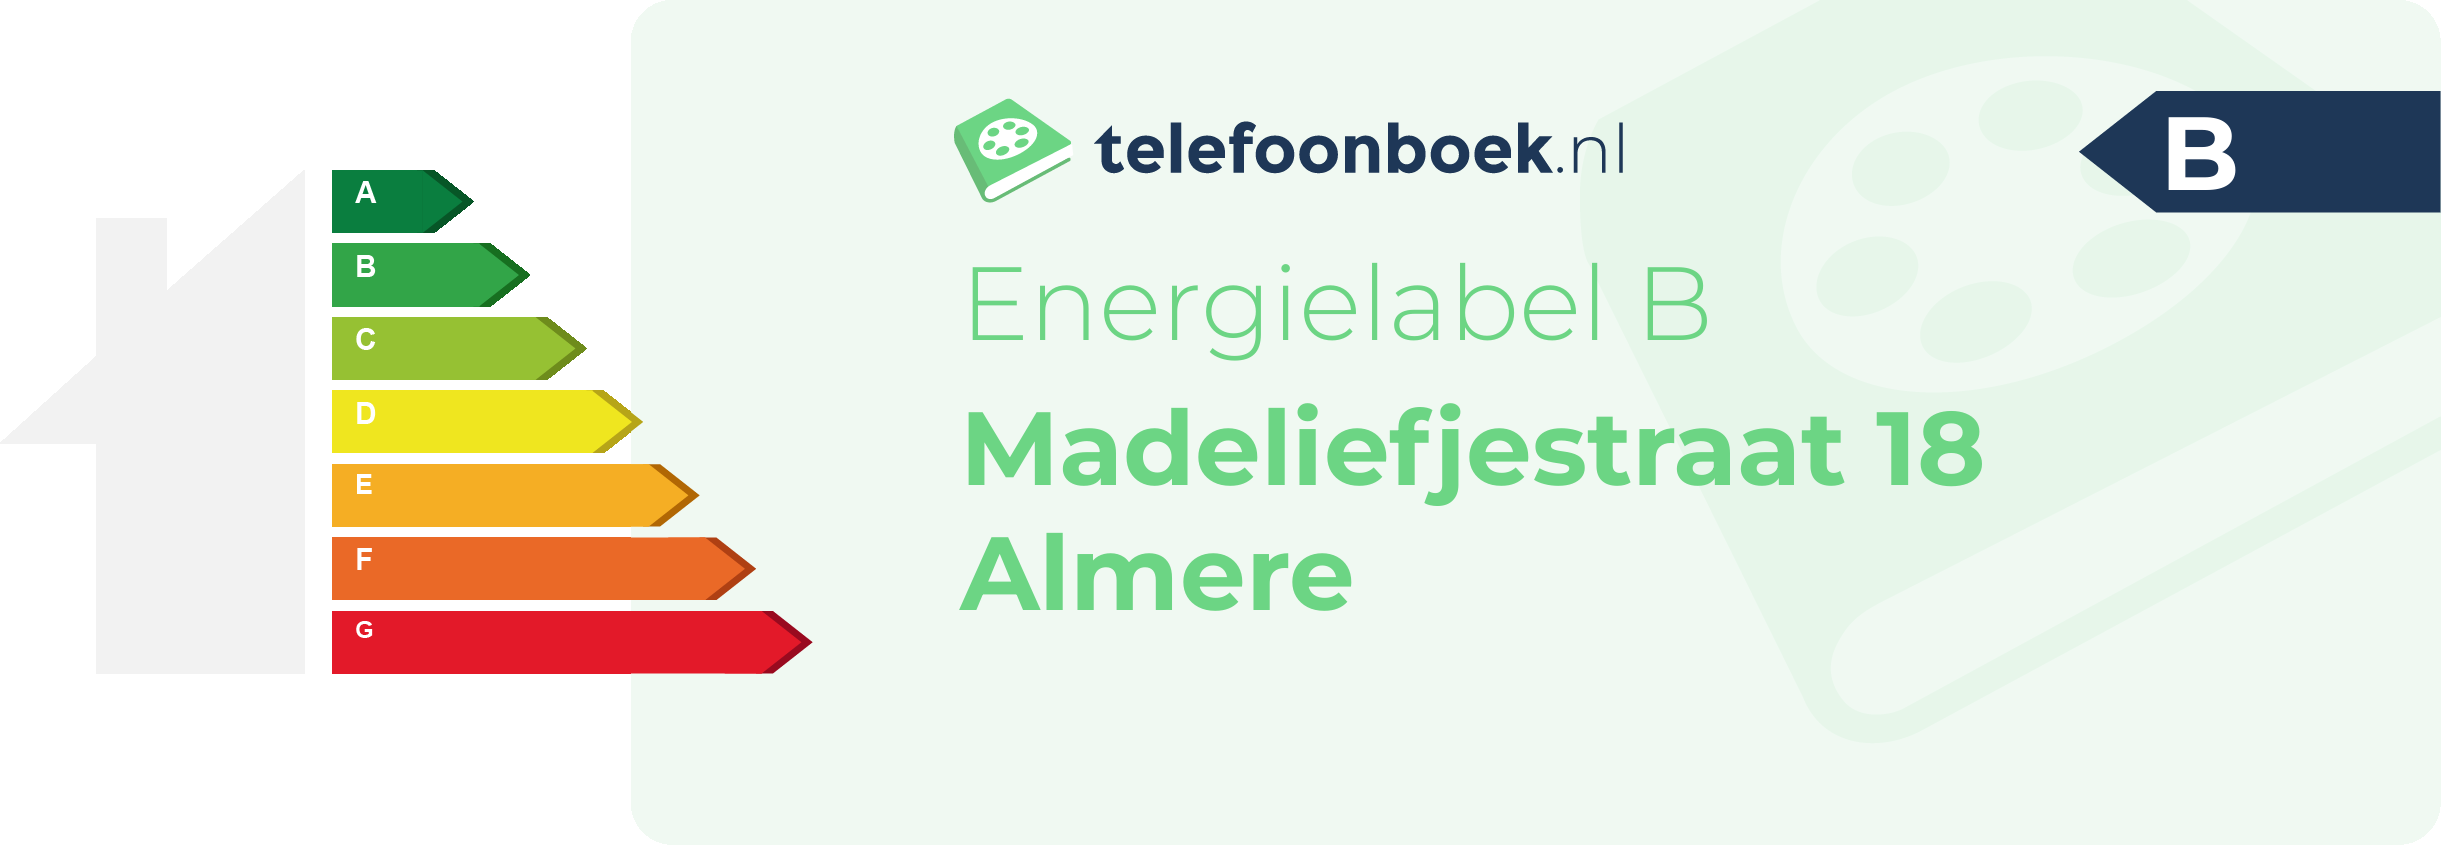 Energielabel Madeliefjestraat 18 Almere